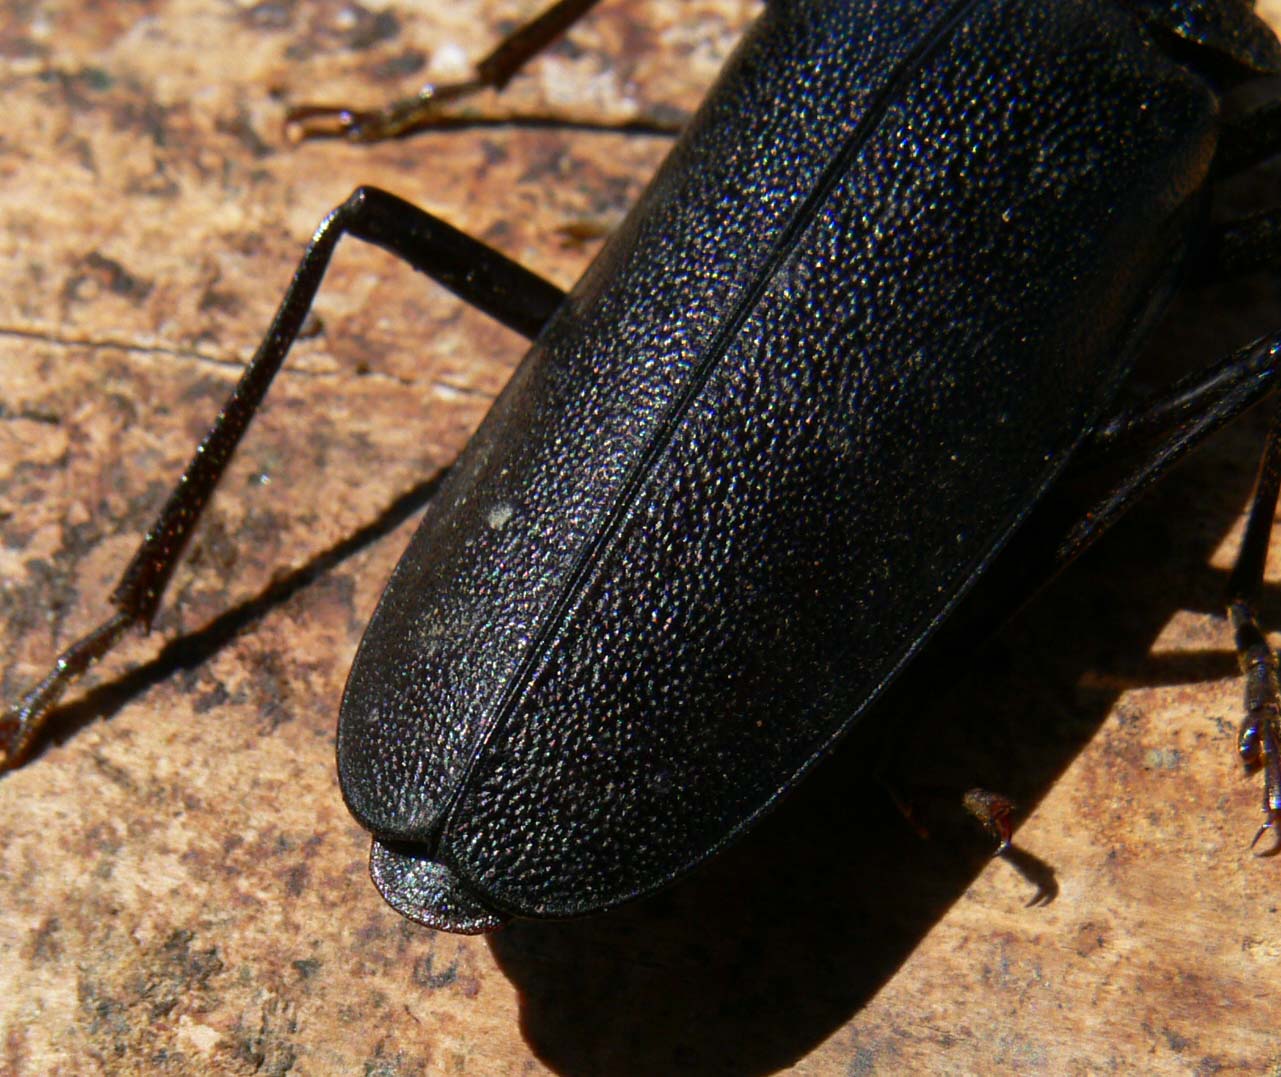 Identificazione Cerambycidae: Ergates faber